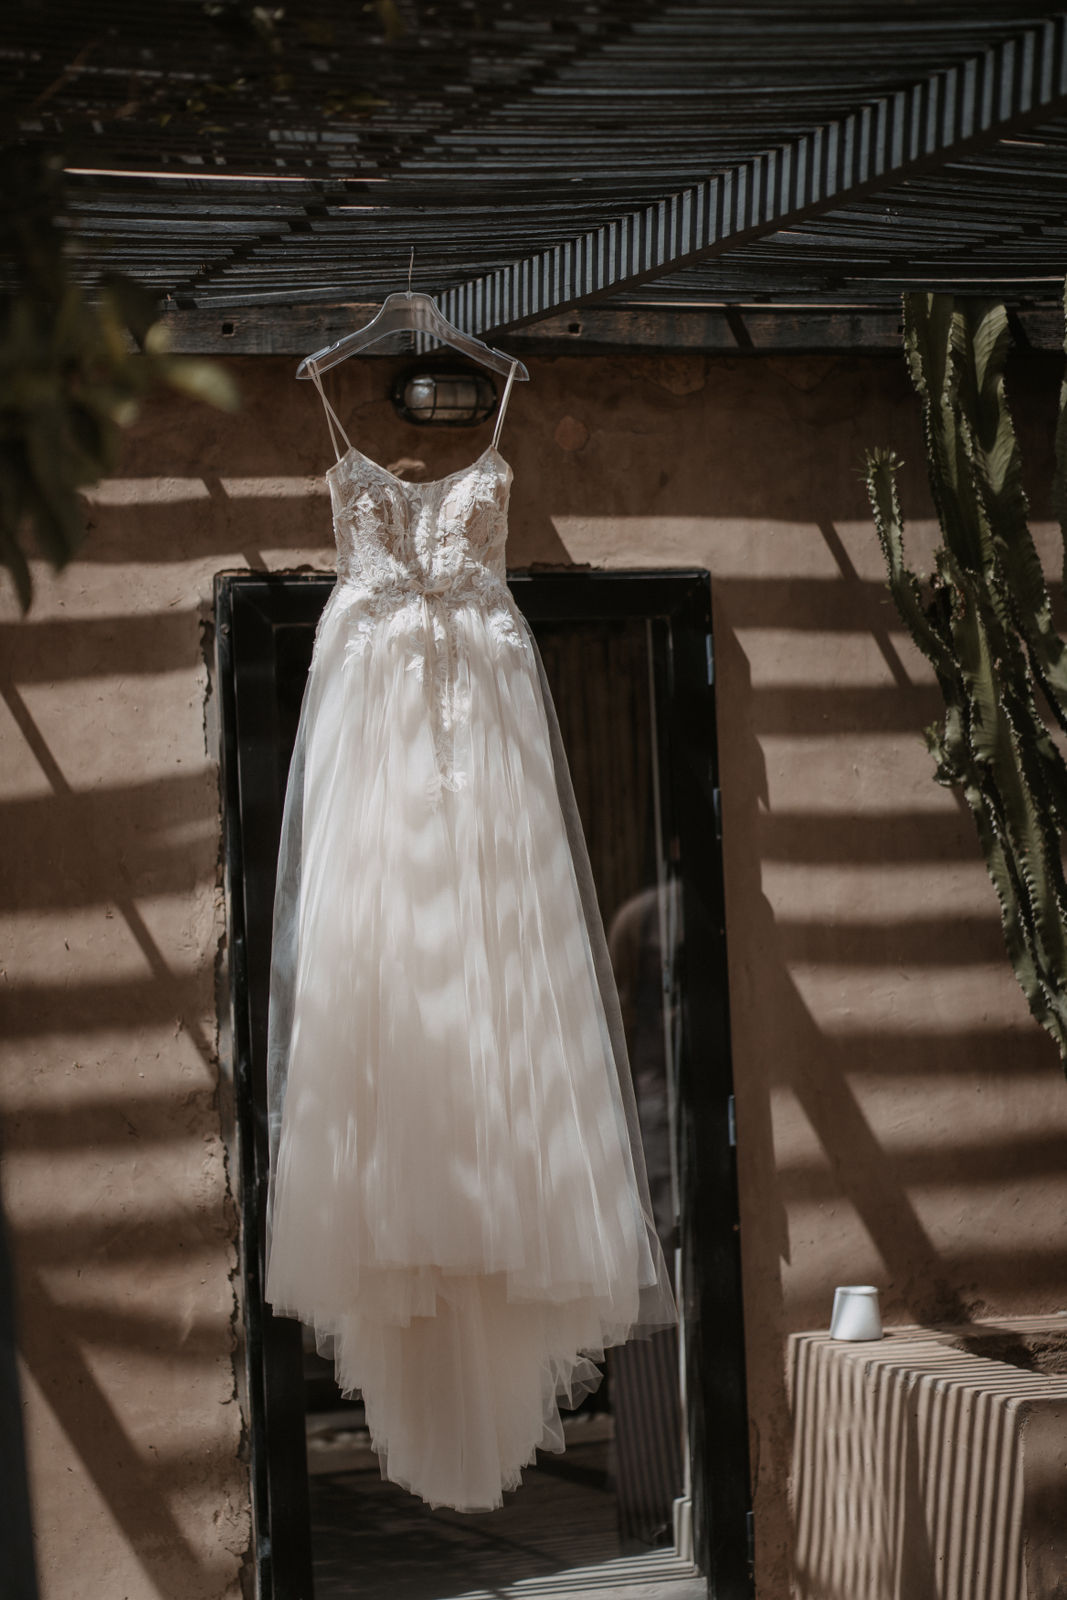 Mariage bohème à Marrakech - Aline + Geoffrey - Blog Mariage Madame C